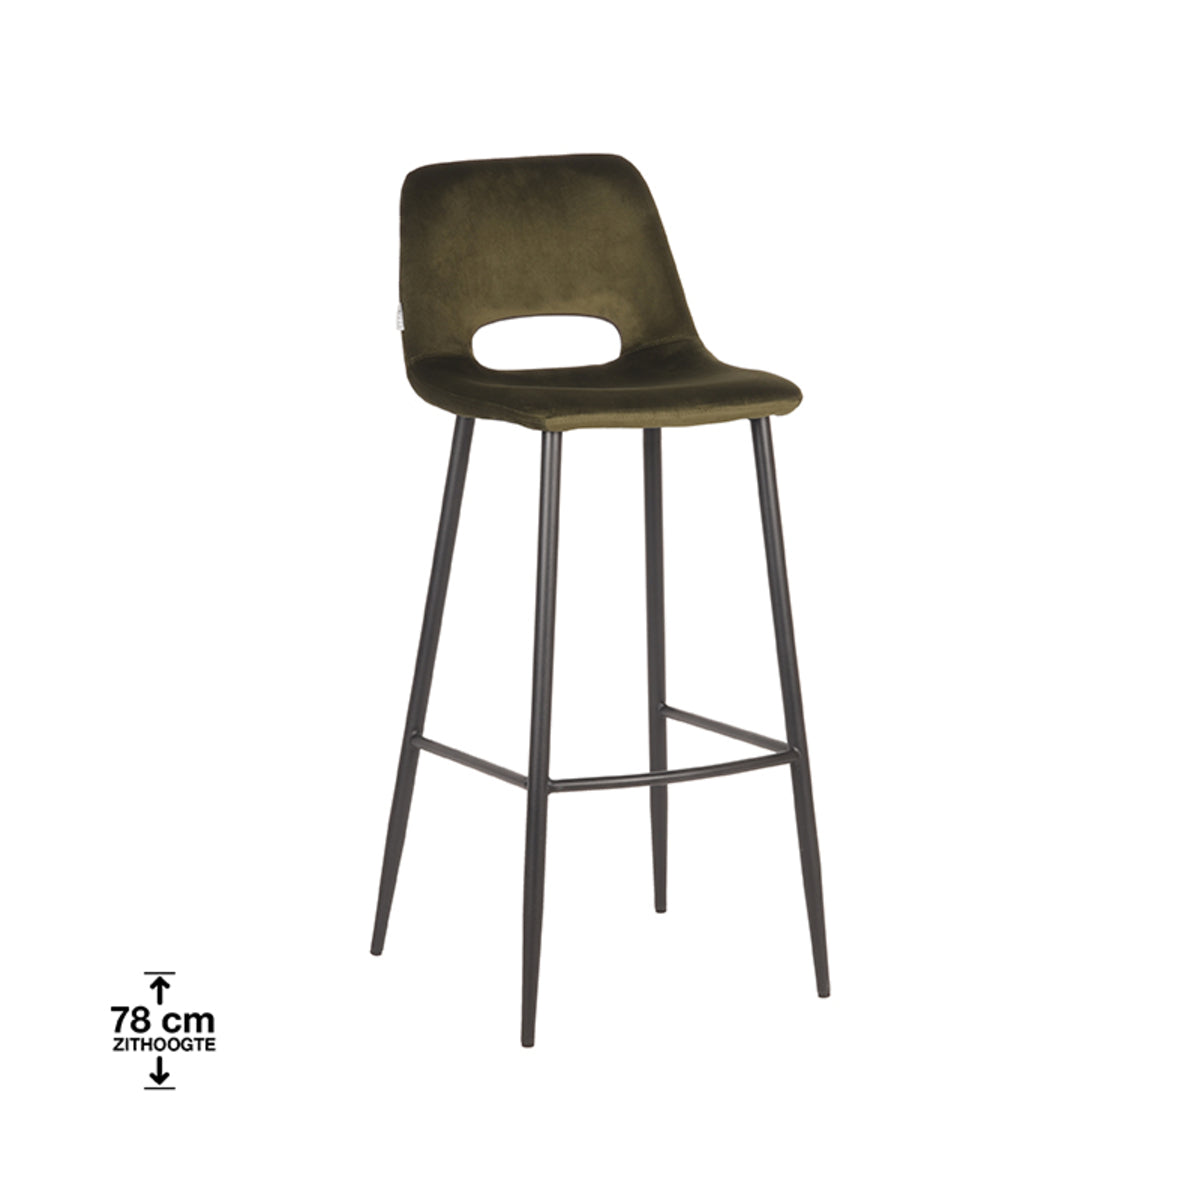 LABEL51 Bar stool Josh - Army green - Velvet - Seat height 78 |